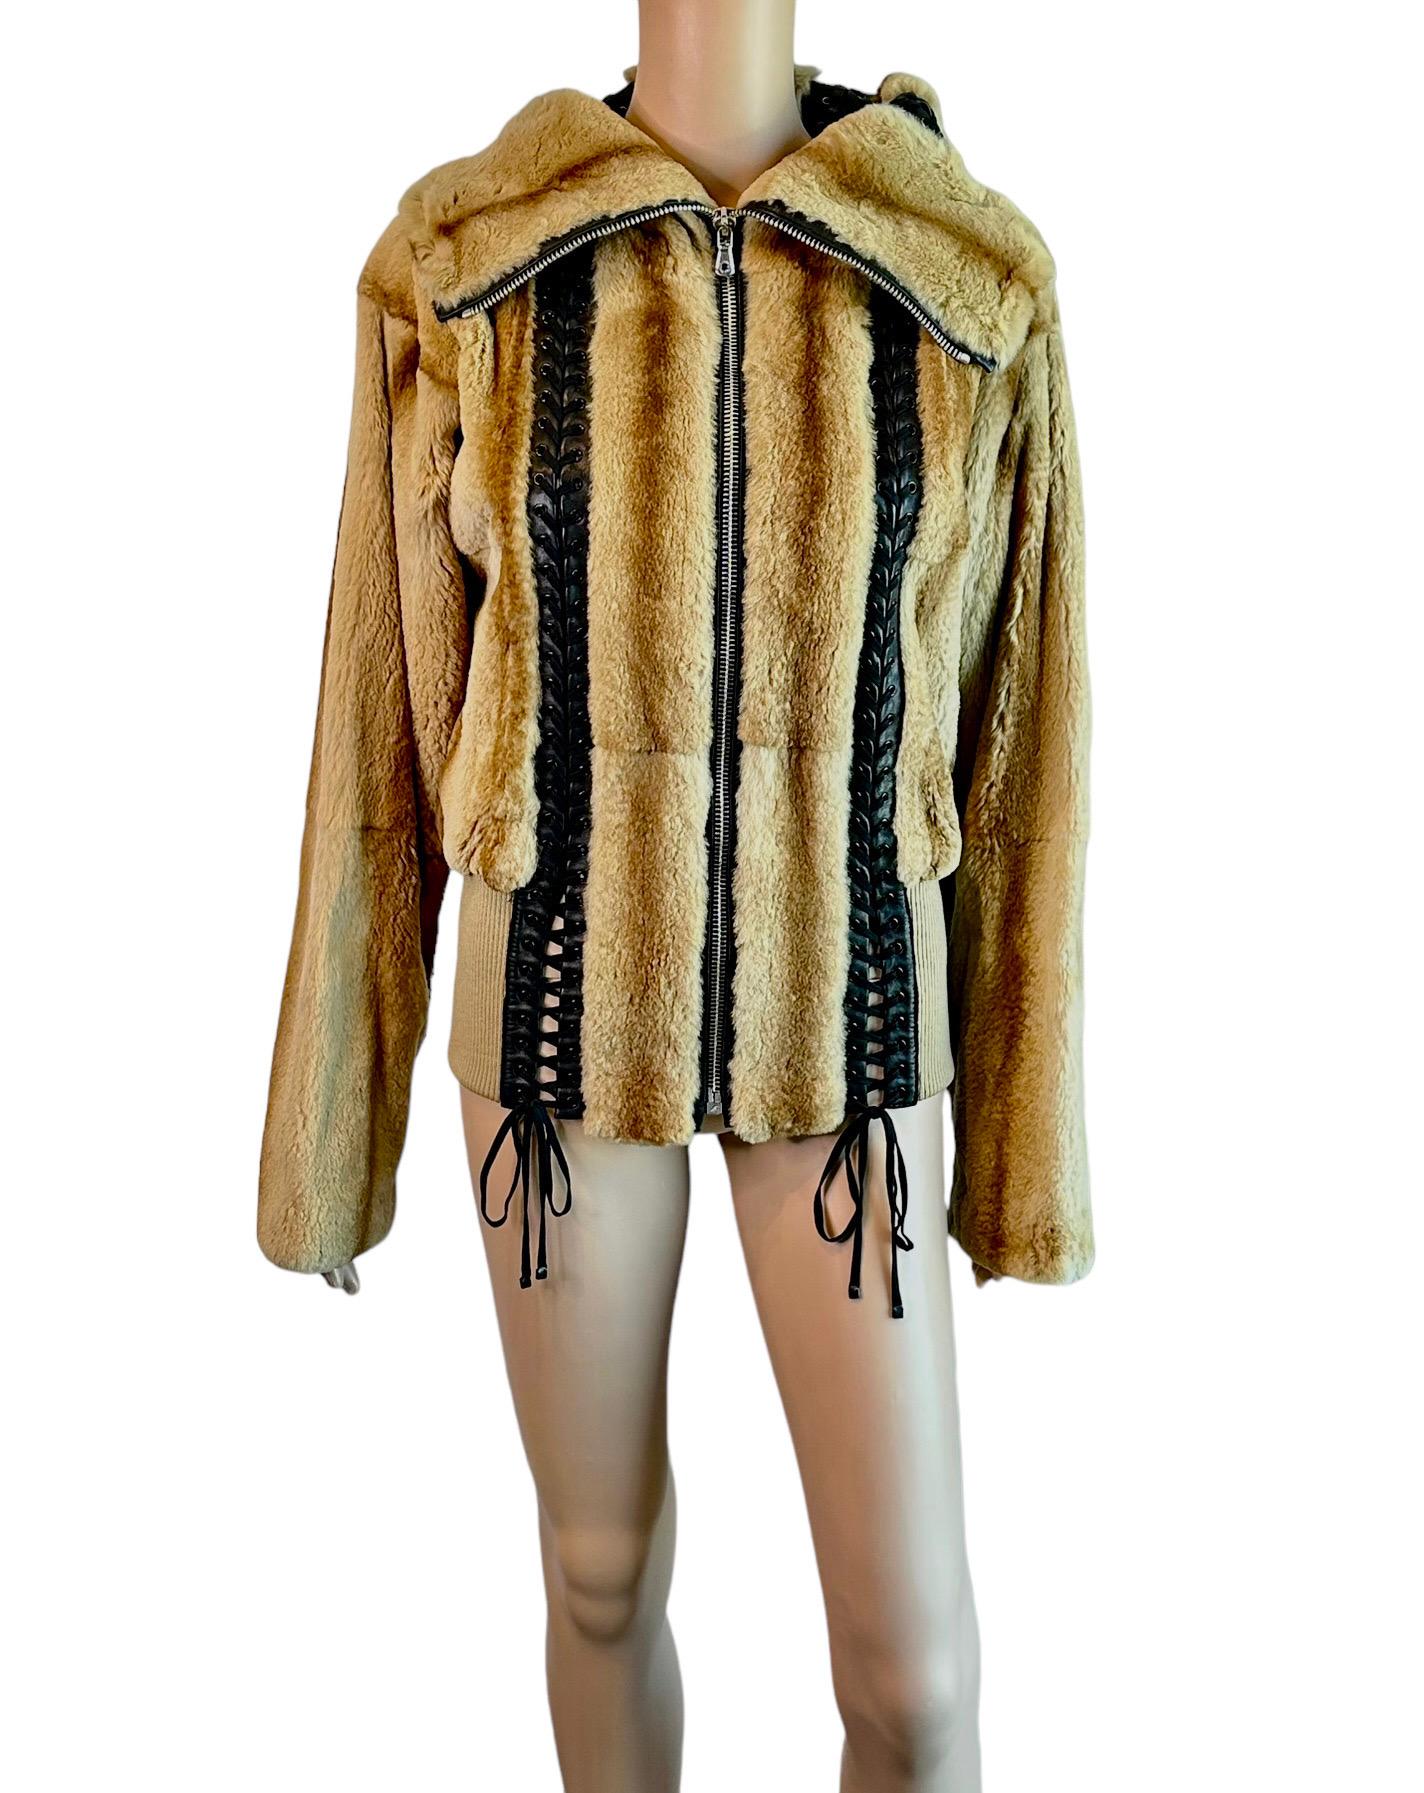 Dolce & Gabbana S/S 2003 Bondage Lace Up Weasel Fur Jacket Coat For Sale 9